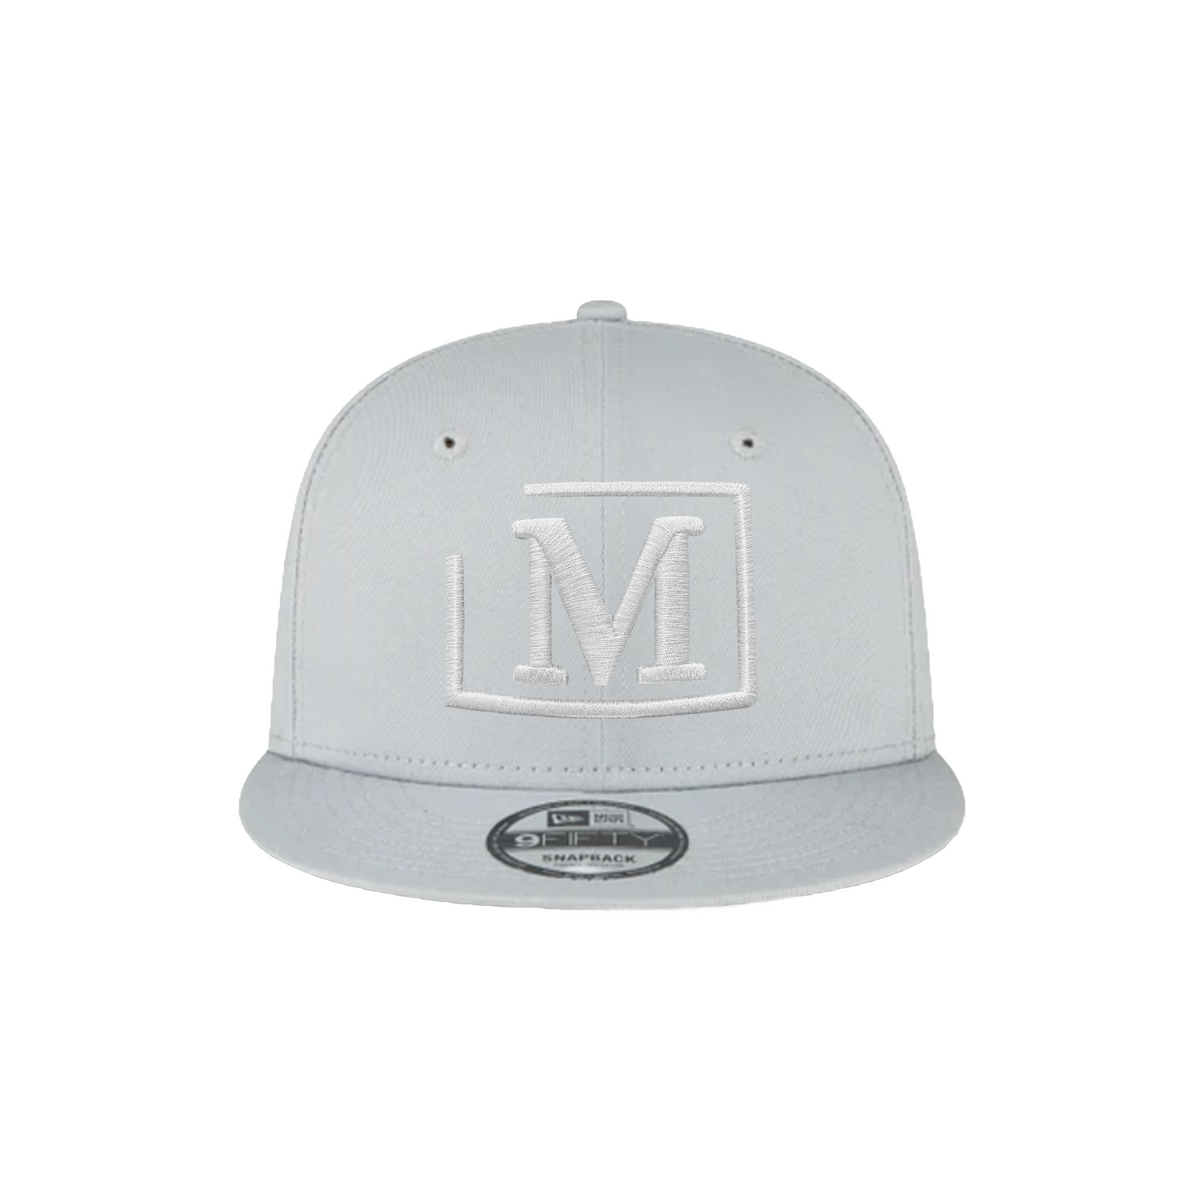 MDB Brand x New Era 9Fifty Snapback Embroidered Baseball Cap - White